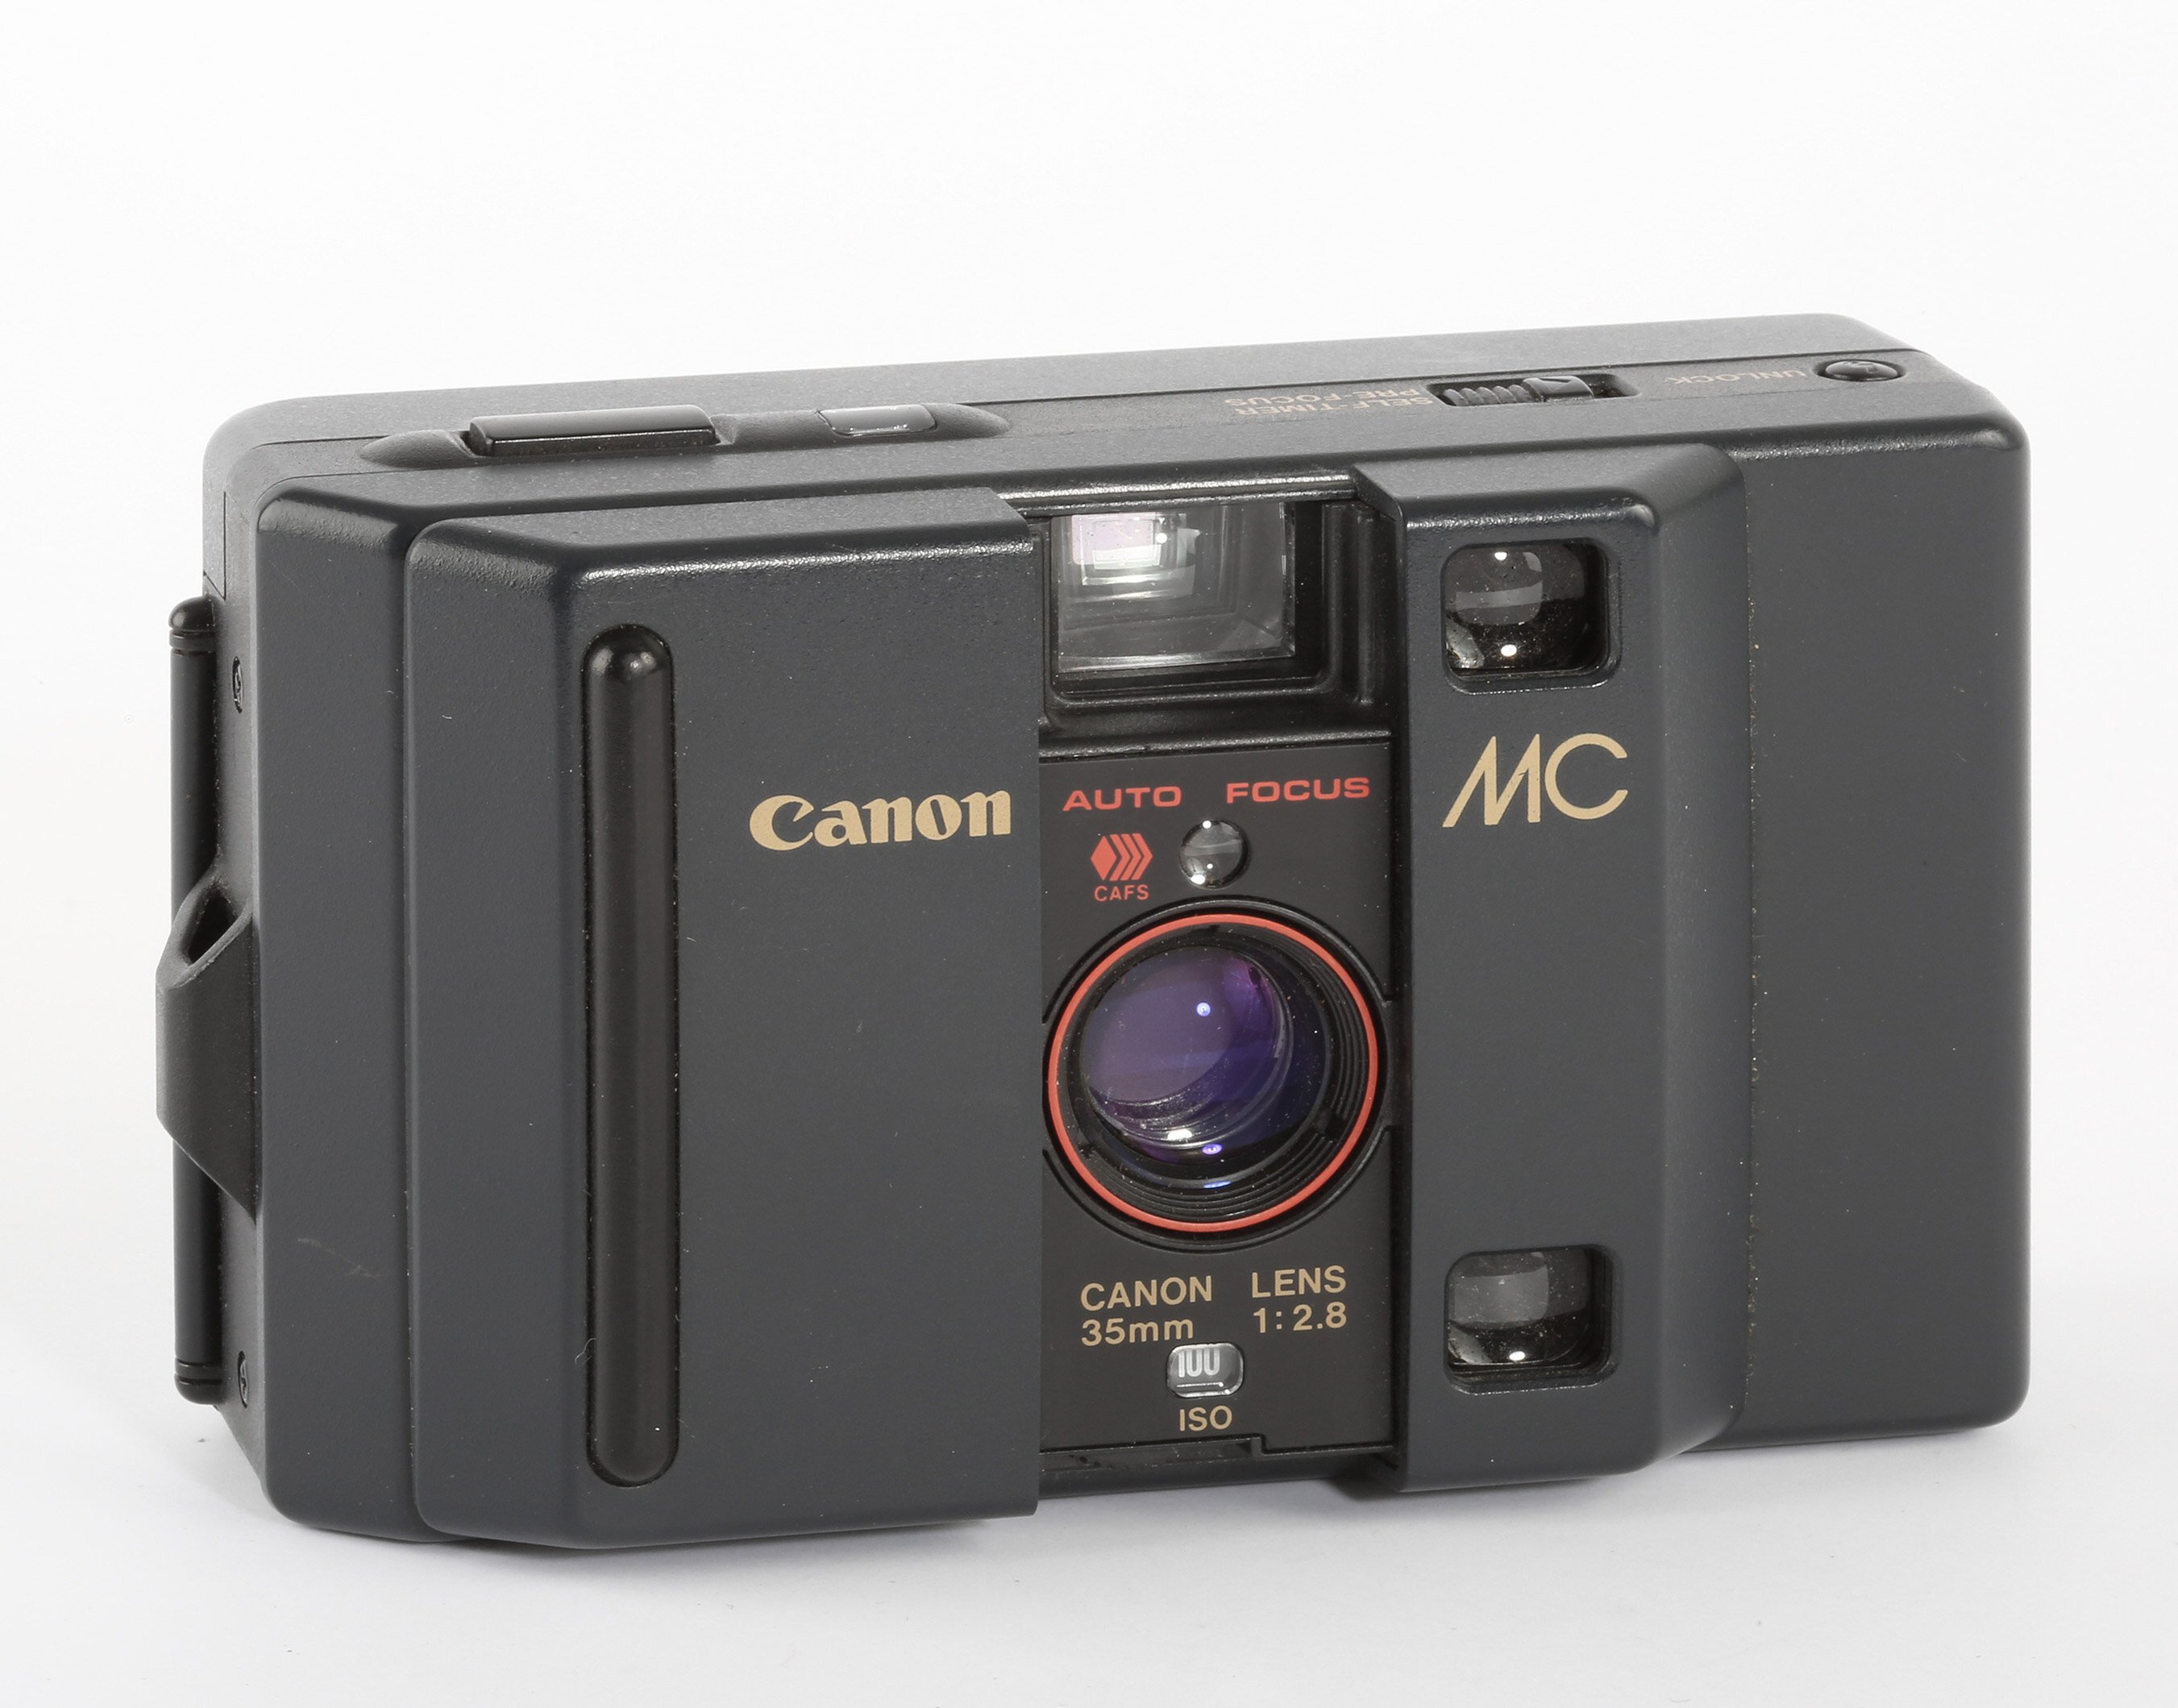 Canon MC Auto 2,8/35mm Kompaktkamera